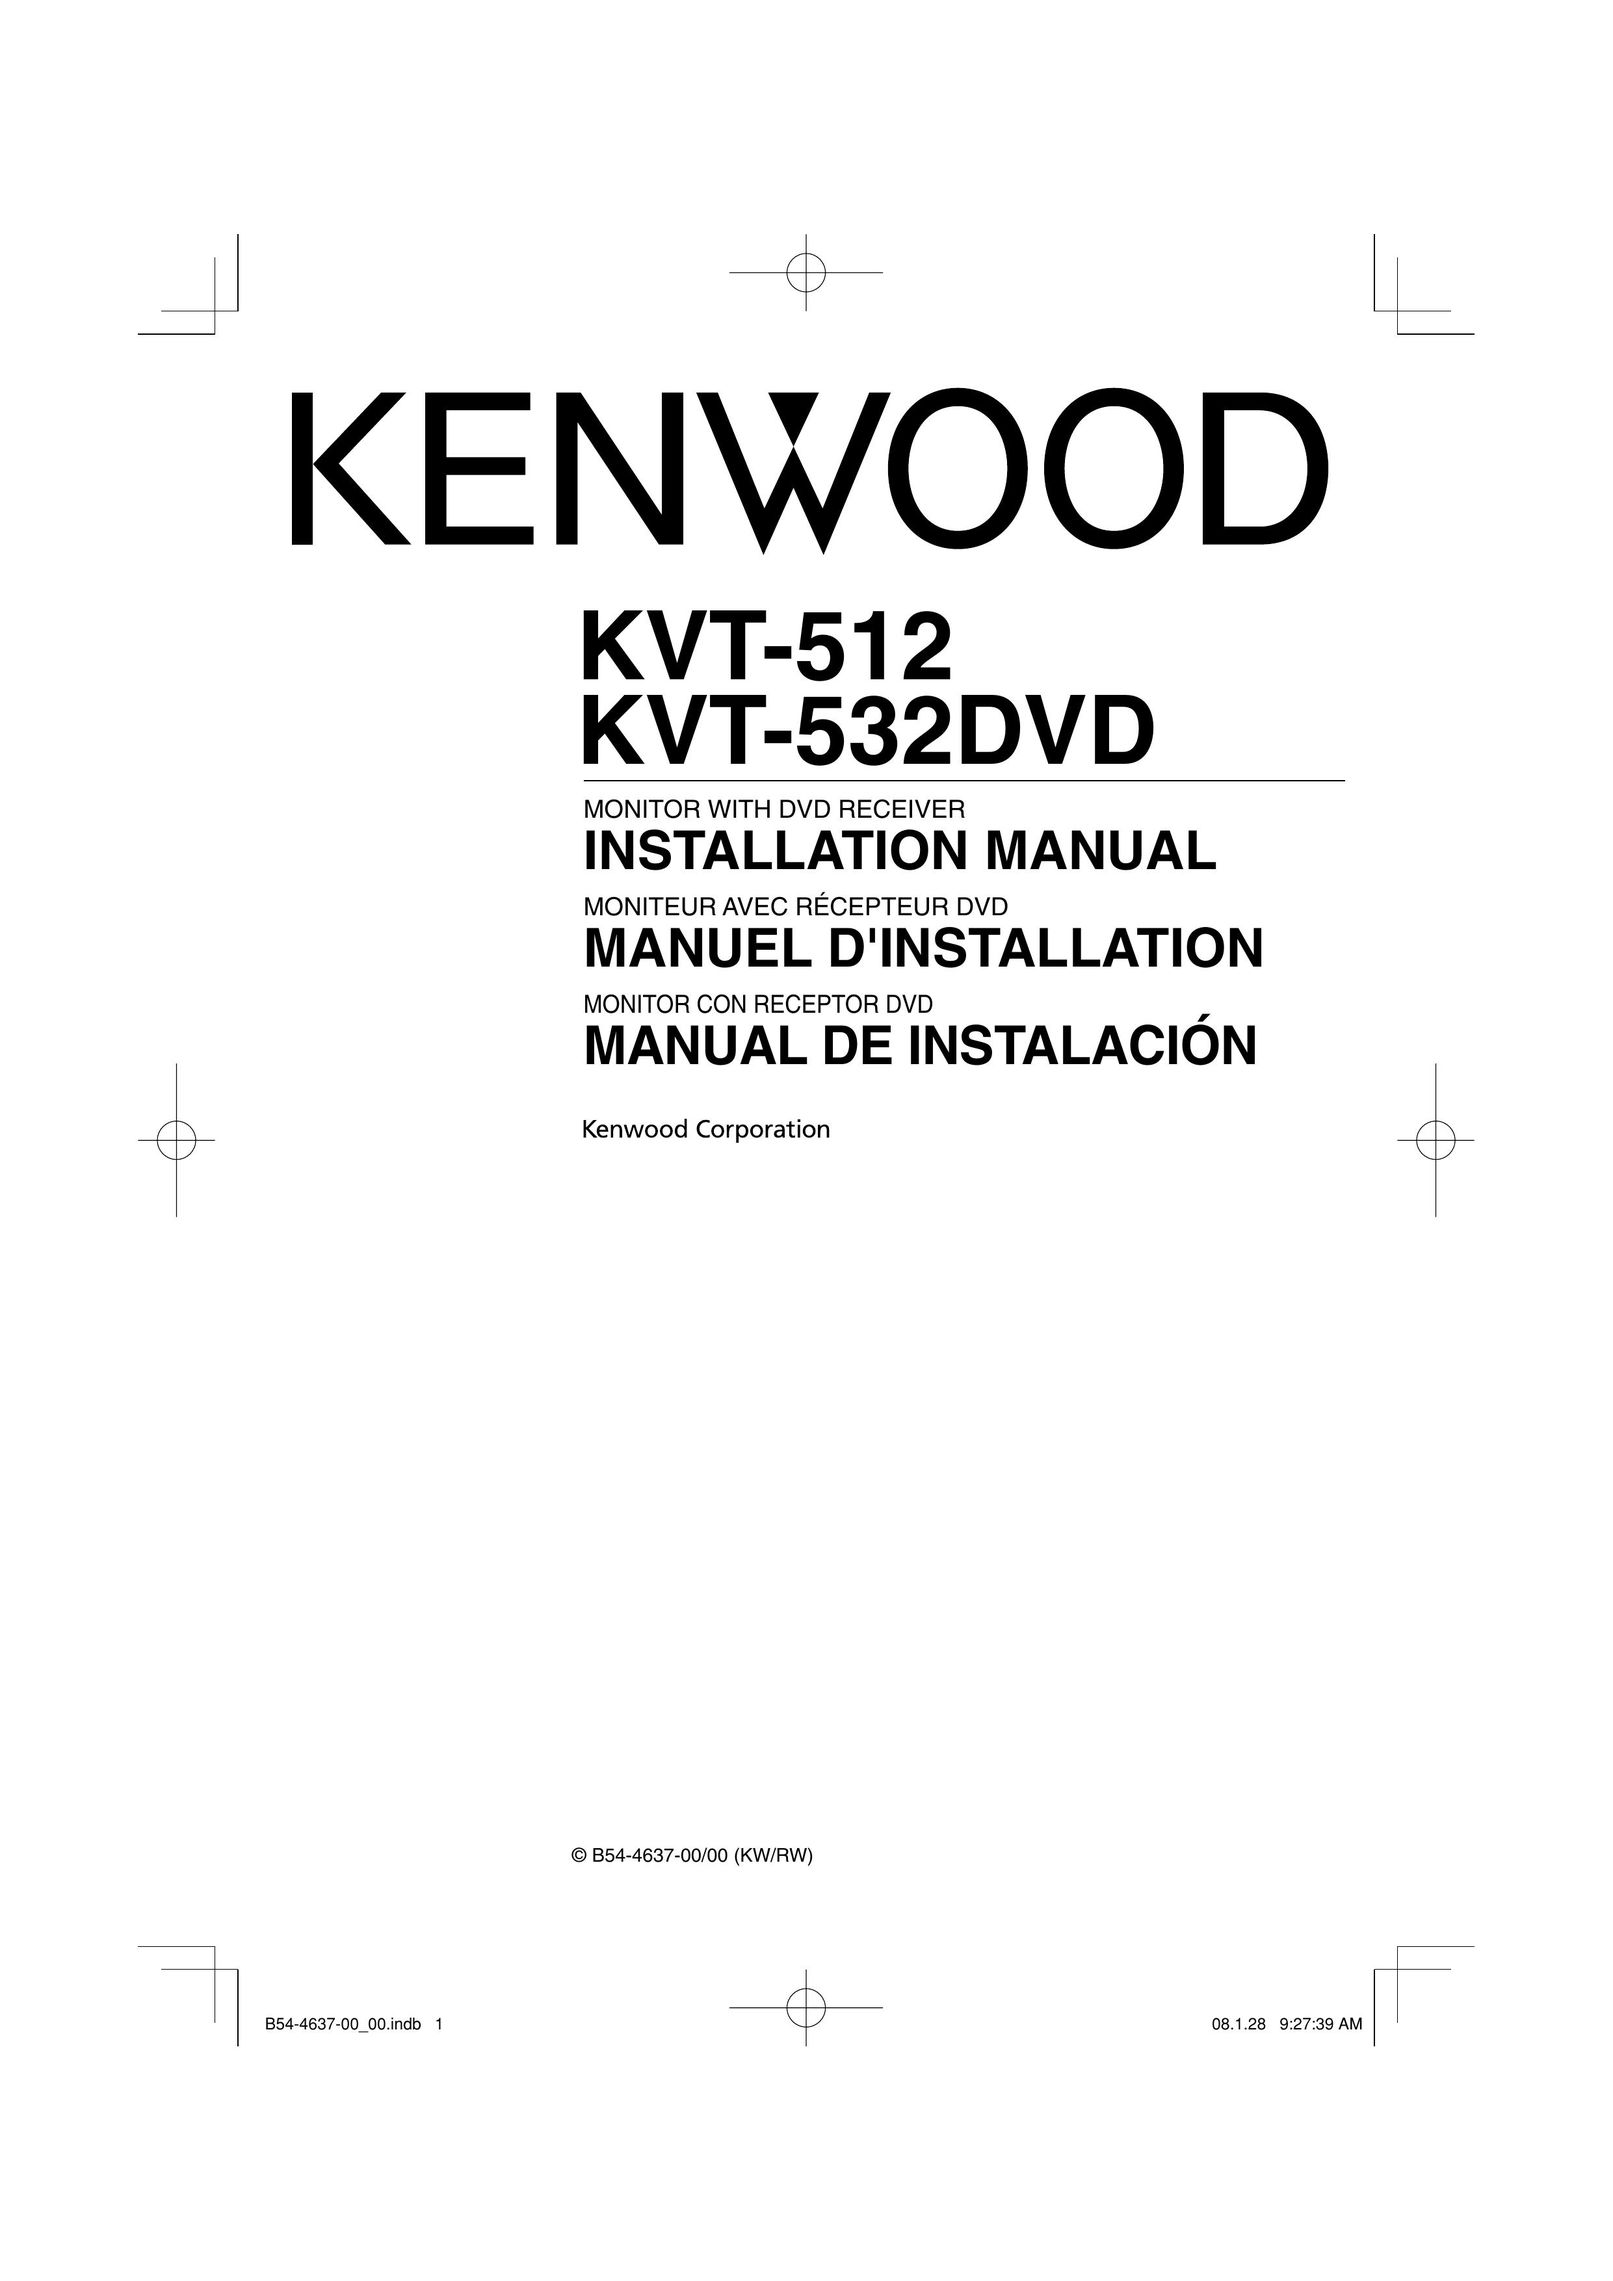 Kenwood KVT-532 Computer Monitor User Manual